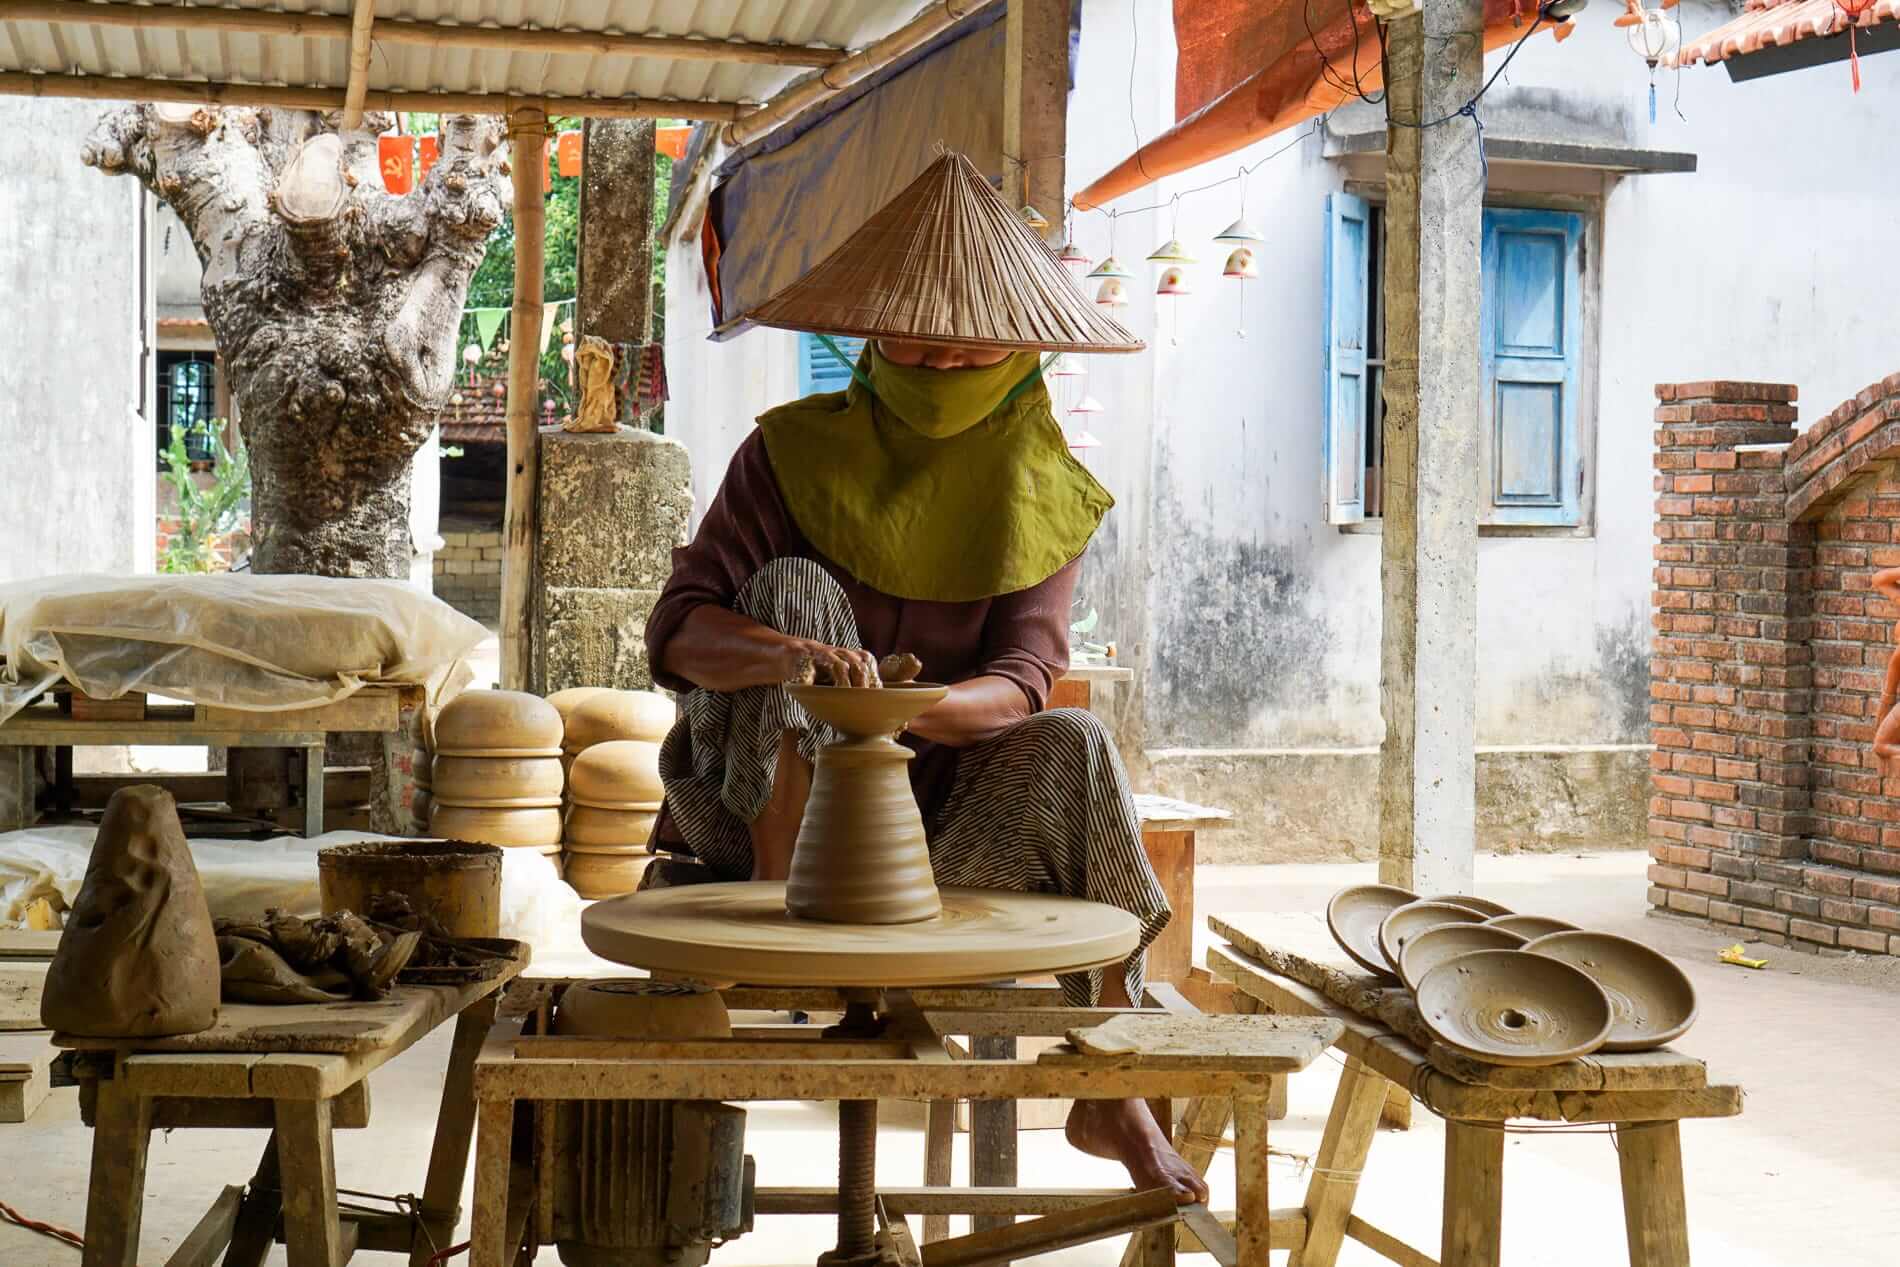 Thanh-Ha-Pottery-Village-Hoi-An